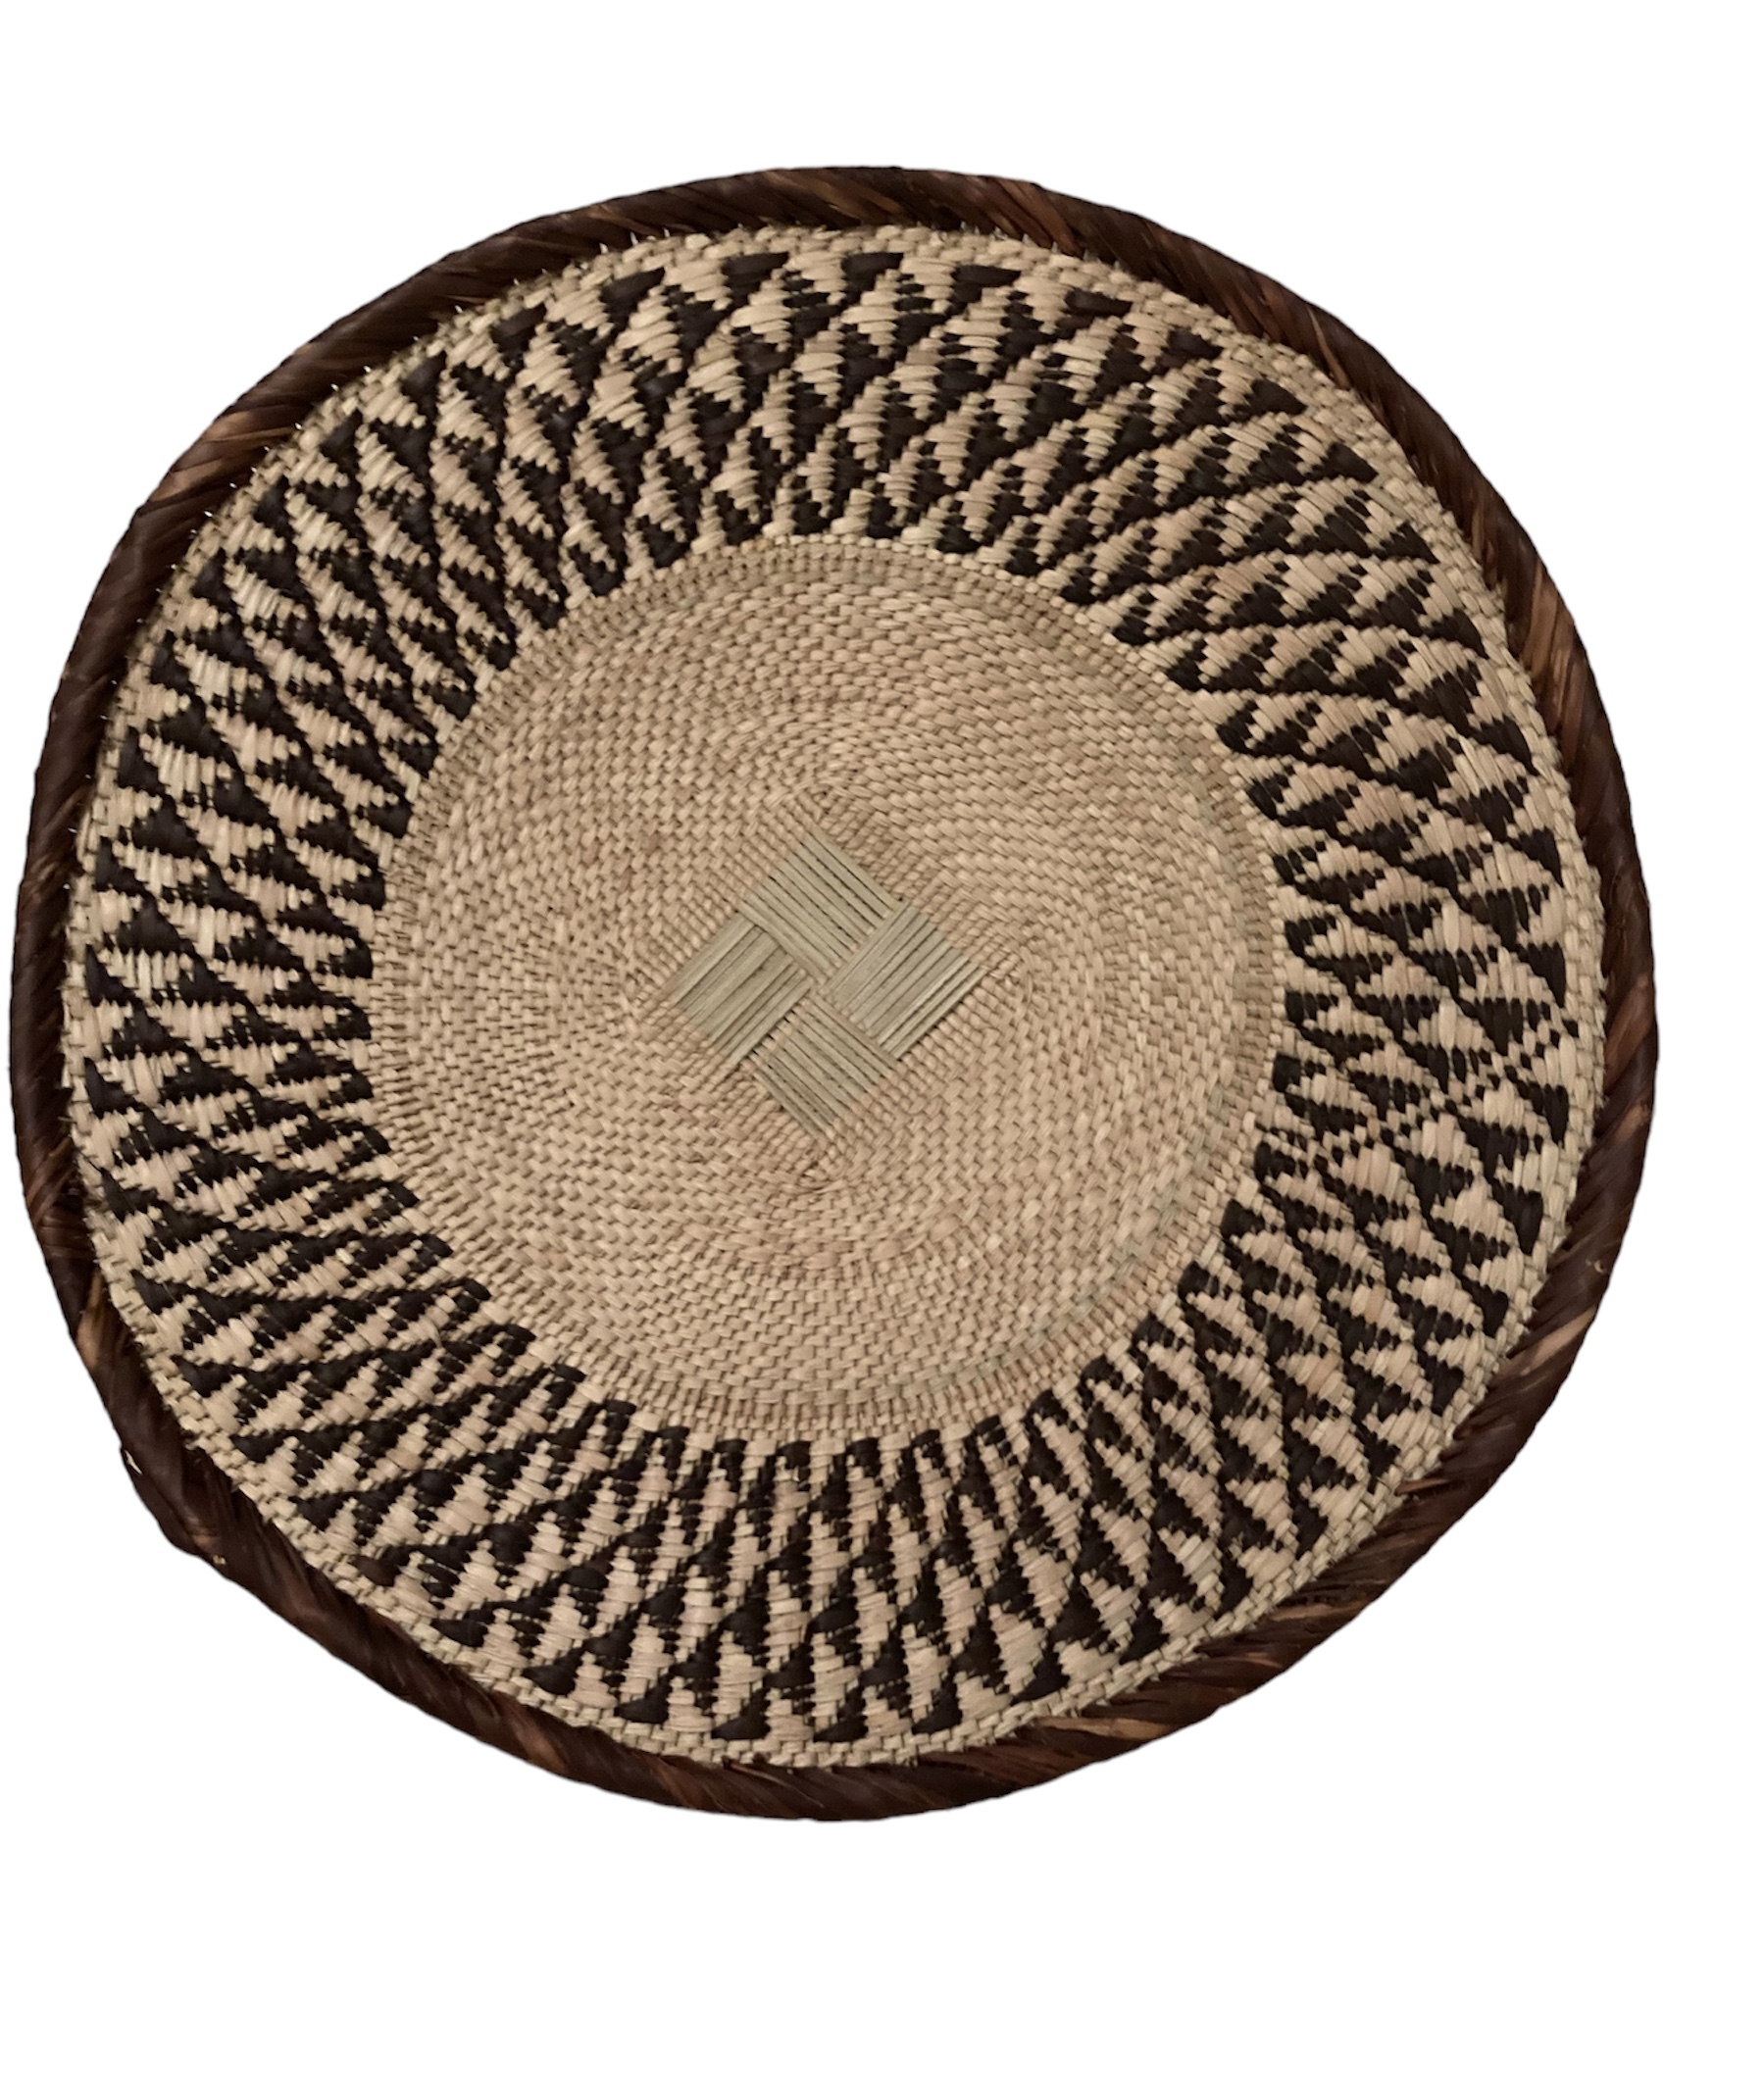 Tonga Basket from Zimbabwe - Design #021 - 19\" dia.